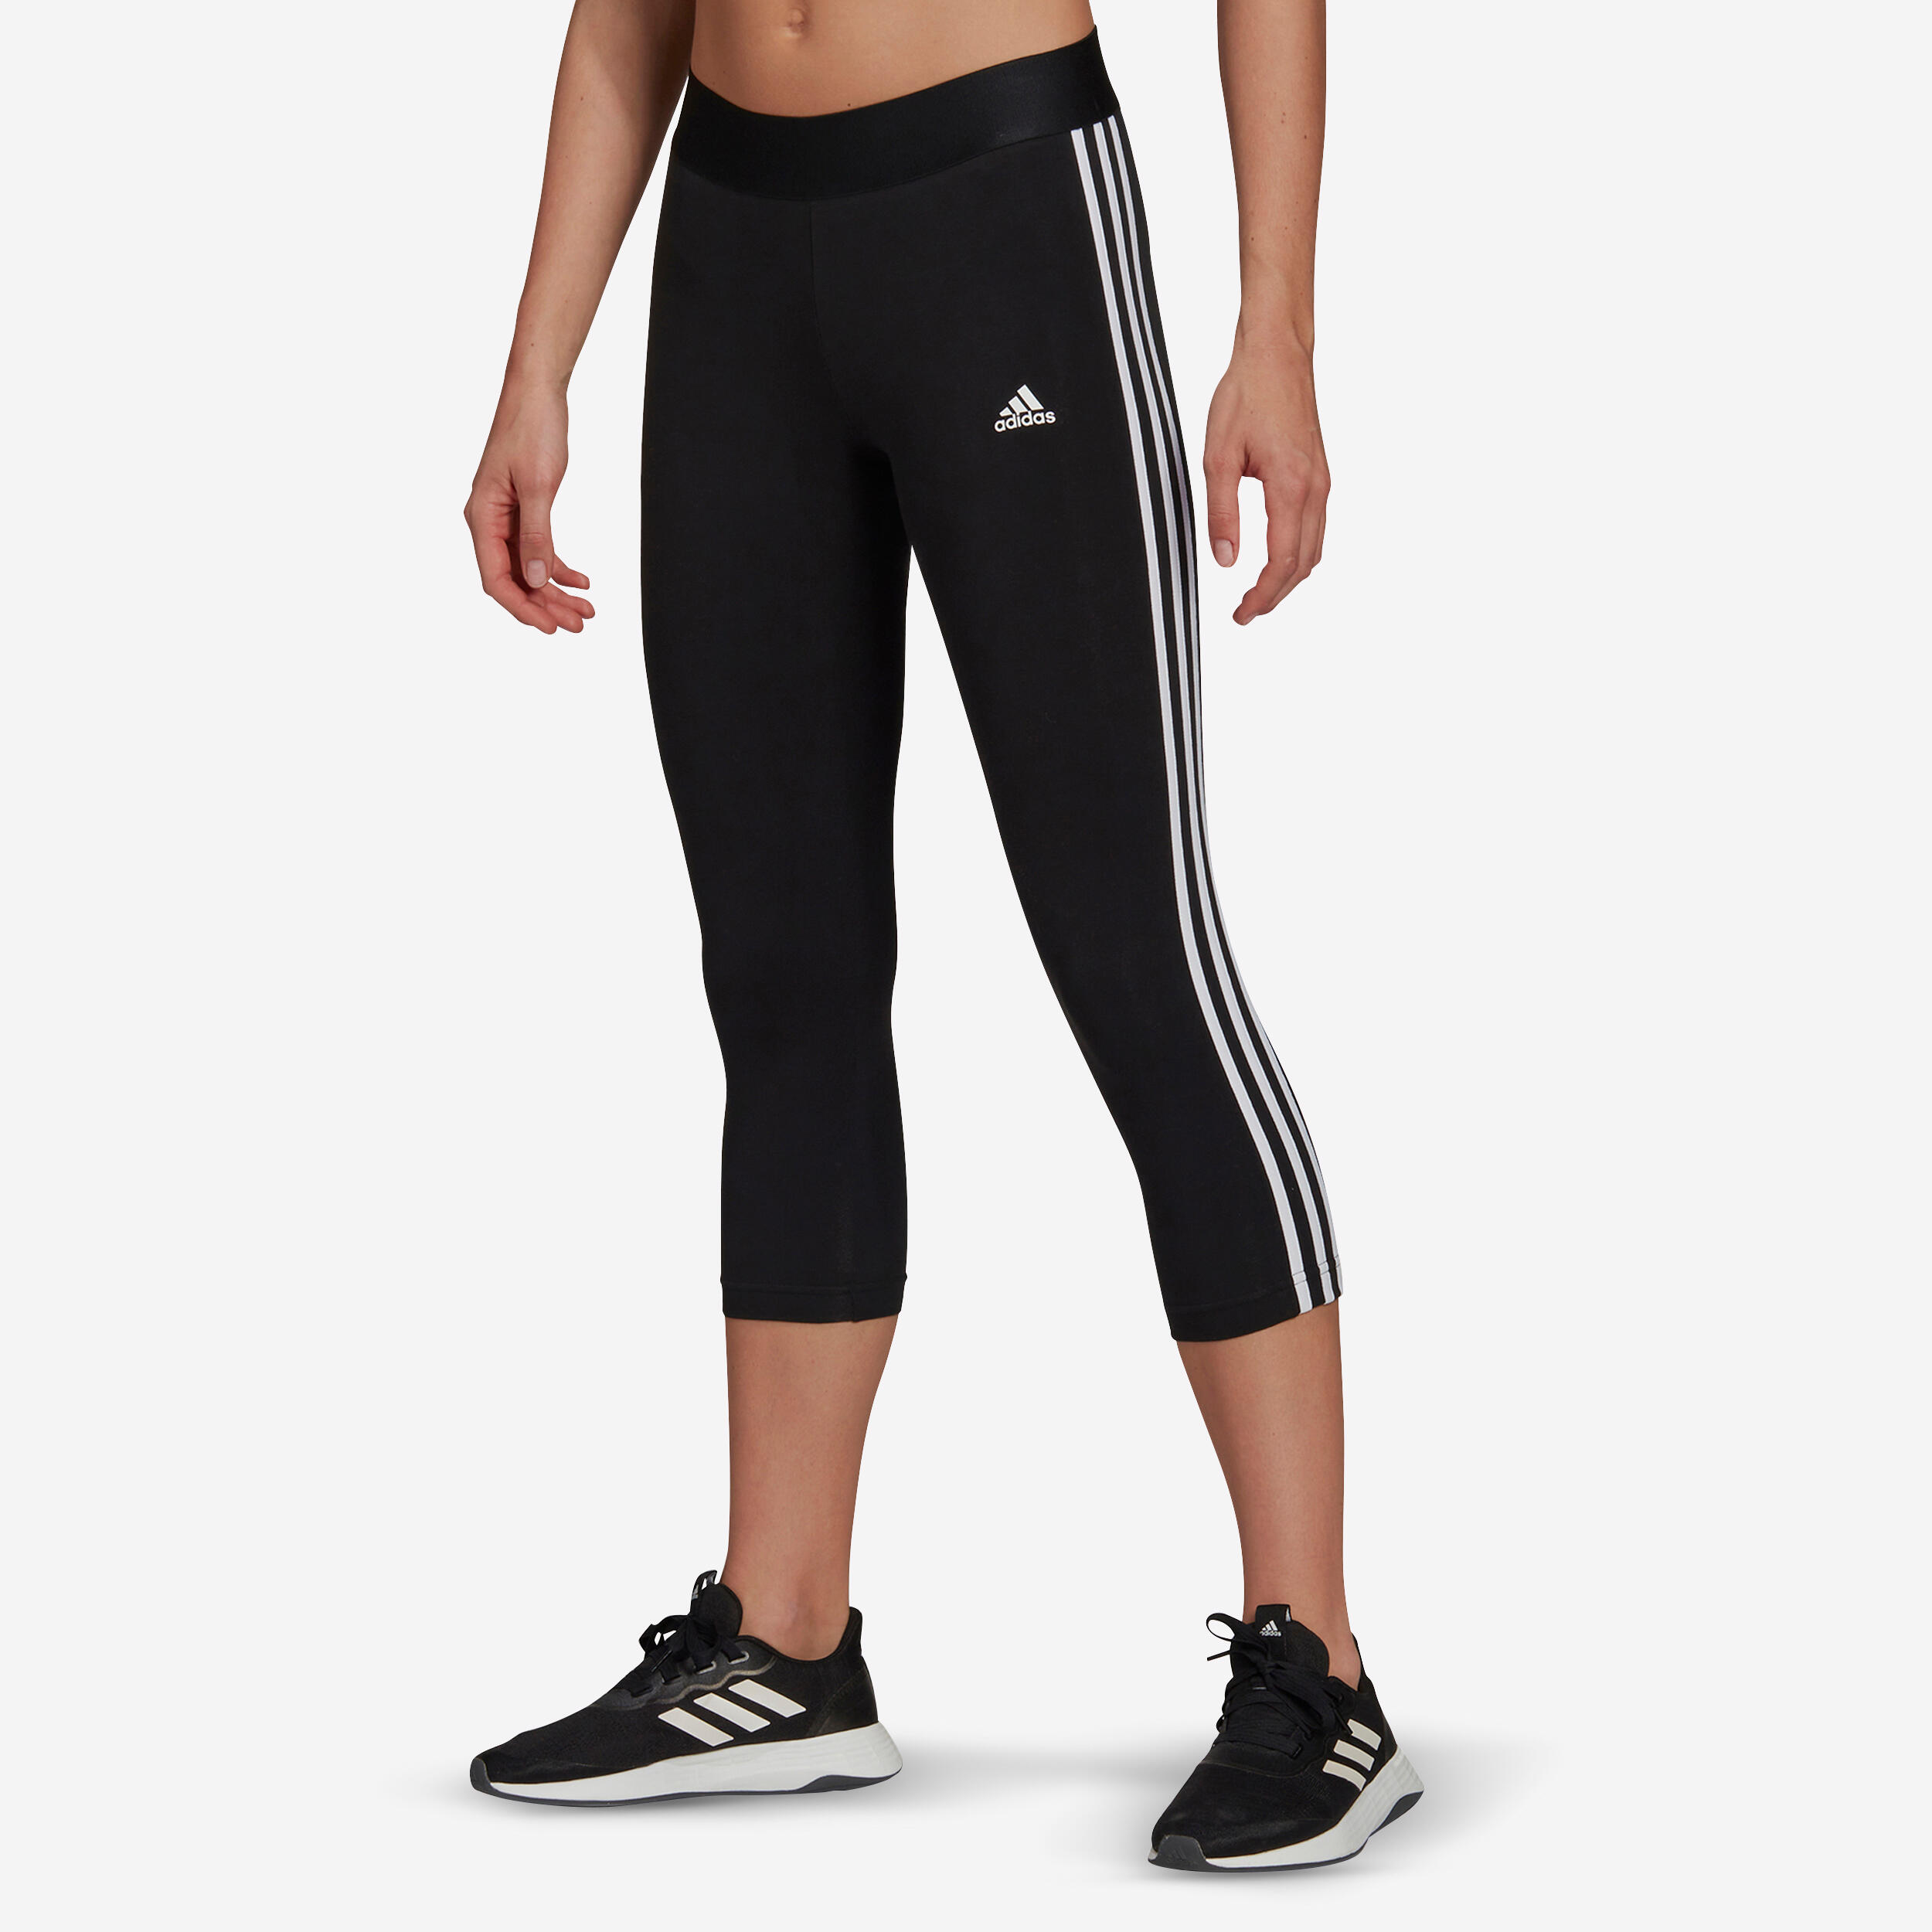 Colanți 7/8 Fitness Adidas Essentials Negru-AlbDamă decathlon.ro  Imbracaminte fitness femei